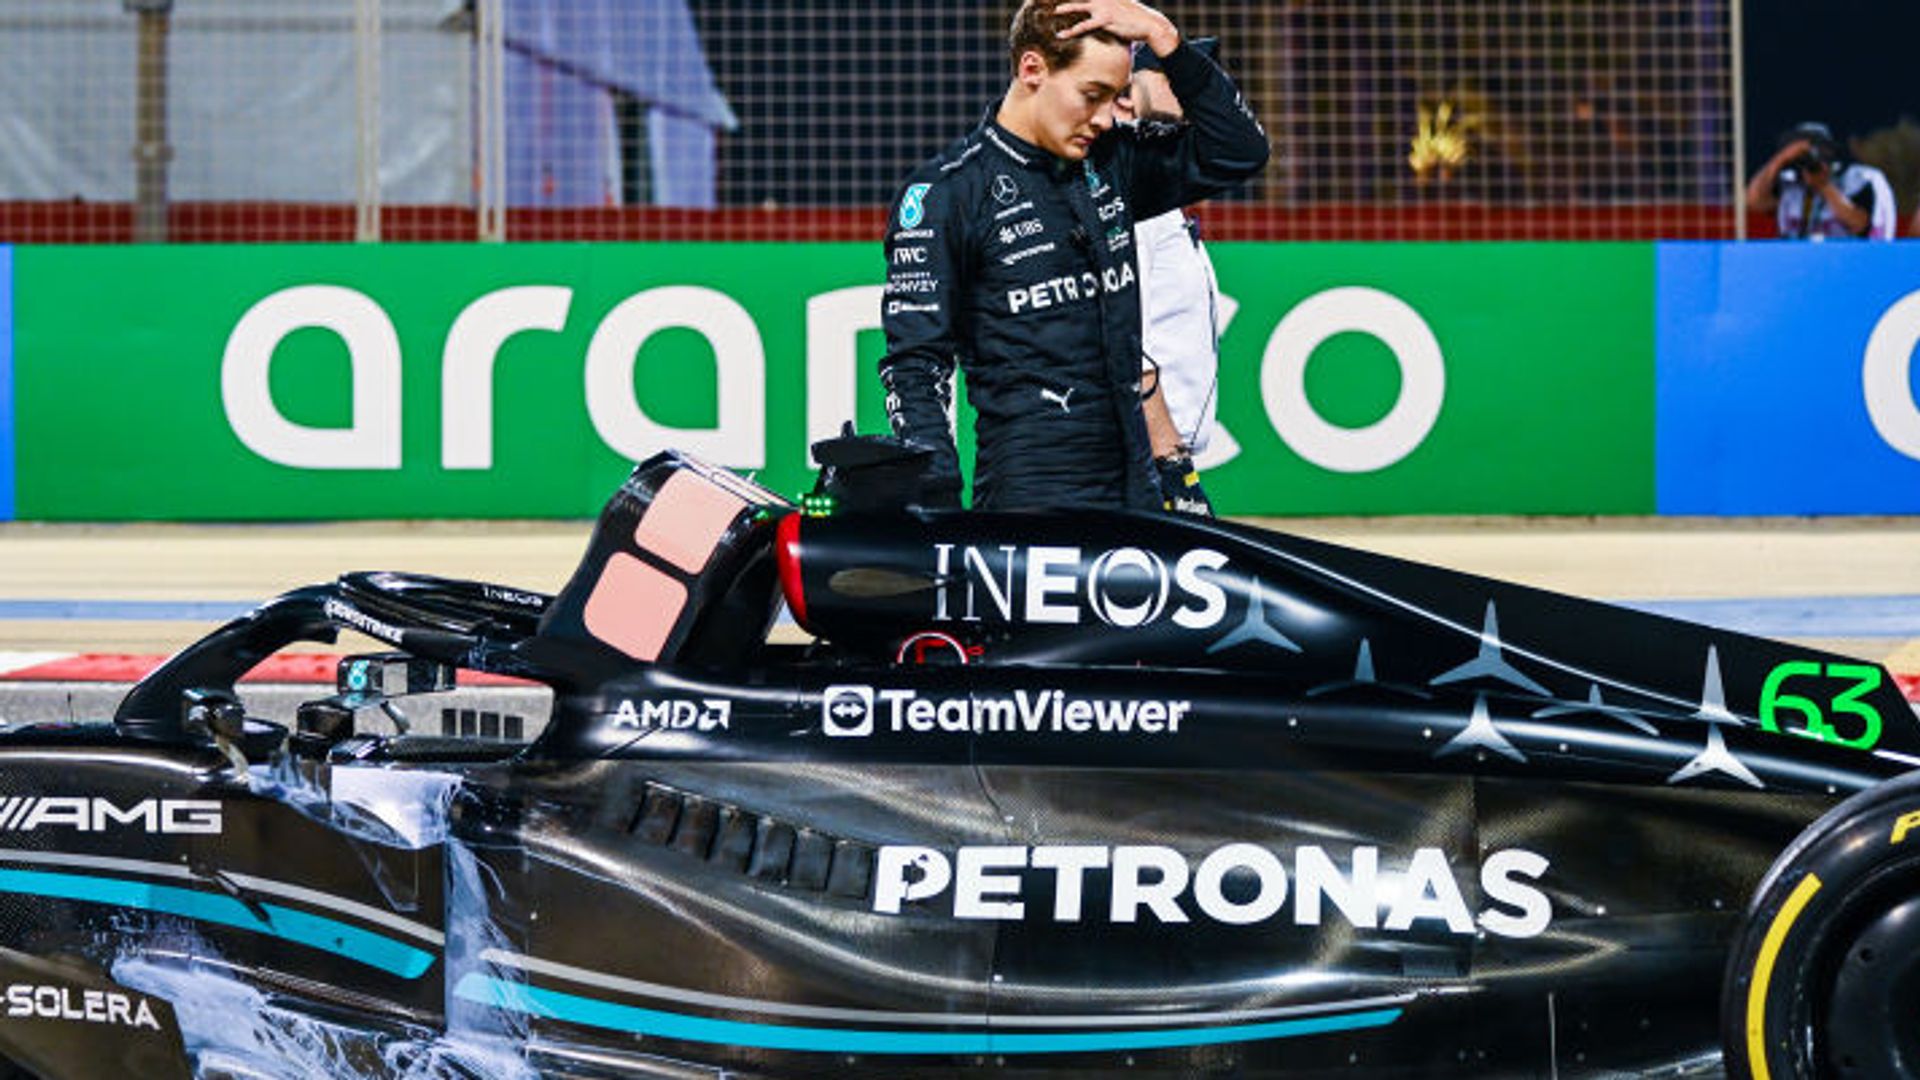 Mercedes hit trouble with testing breakdown | Zhou edges Verstappen